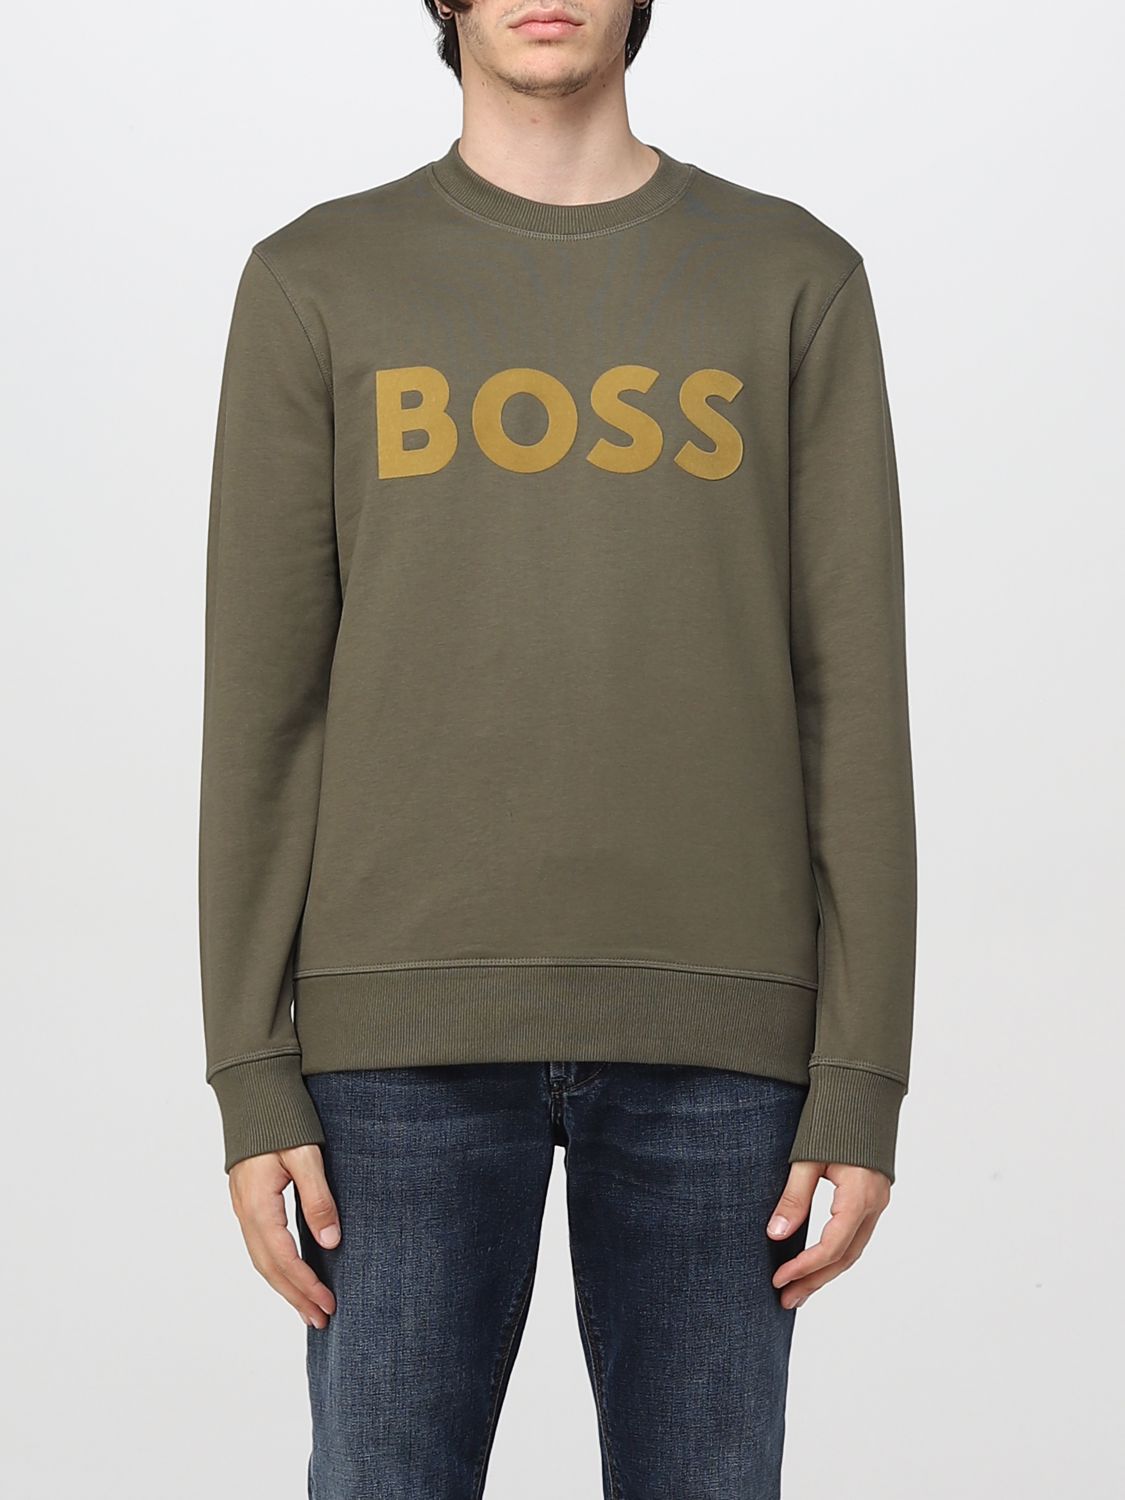 Hugo Boss Sweatshirt Boss Men Color Green